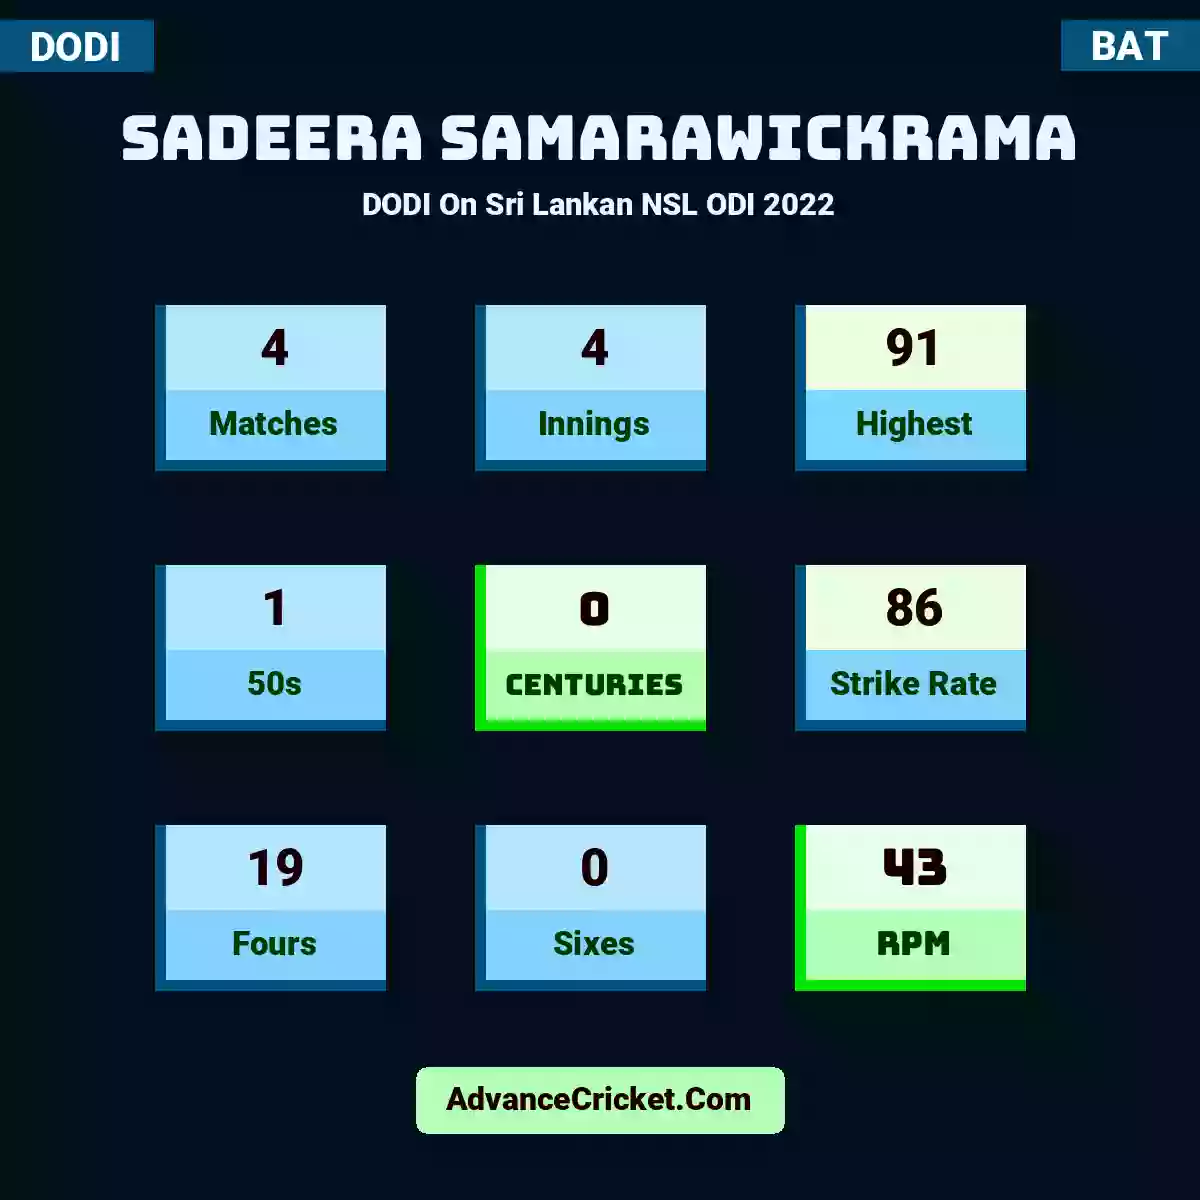 Sadeera Samarawickrama DODI  On Sri Lankan NSL ODI 2022, Sadeera Samarawickrama played 4 matches, scored 91 runs as highest, 1 half-centuries, and 0 centuries, with a strike rate of 86. S.Samarawickrama hit 19 fours and 0 sixes, with an RPM of 43.